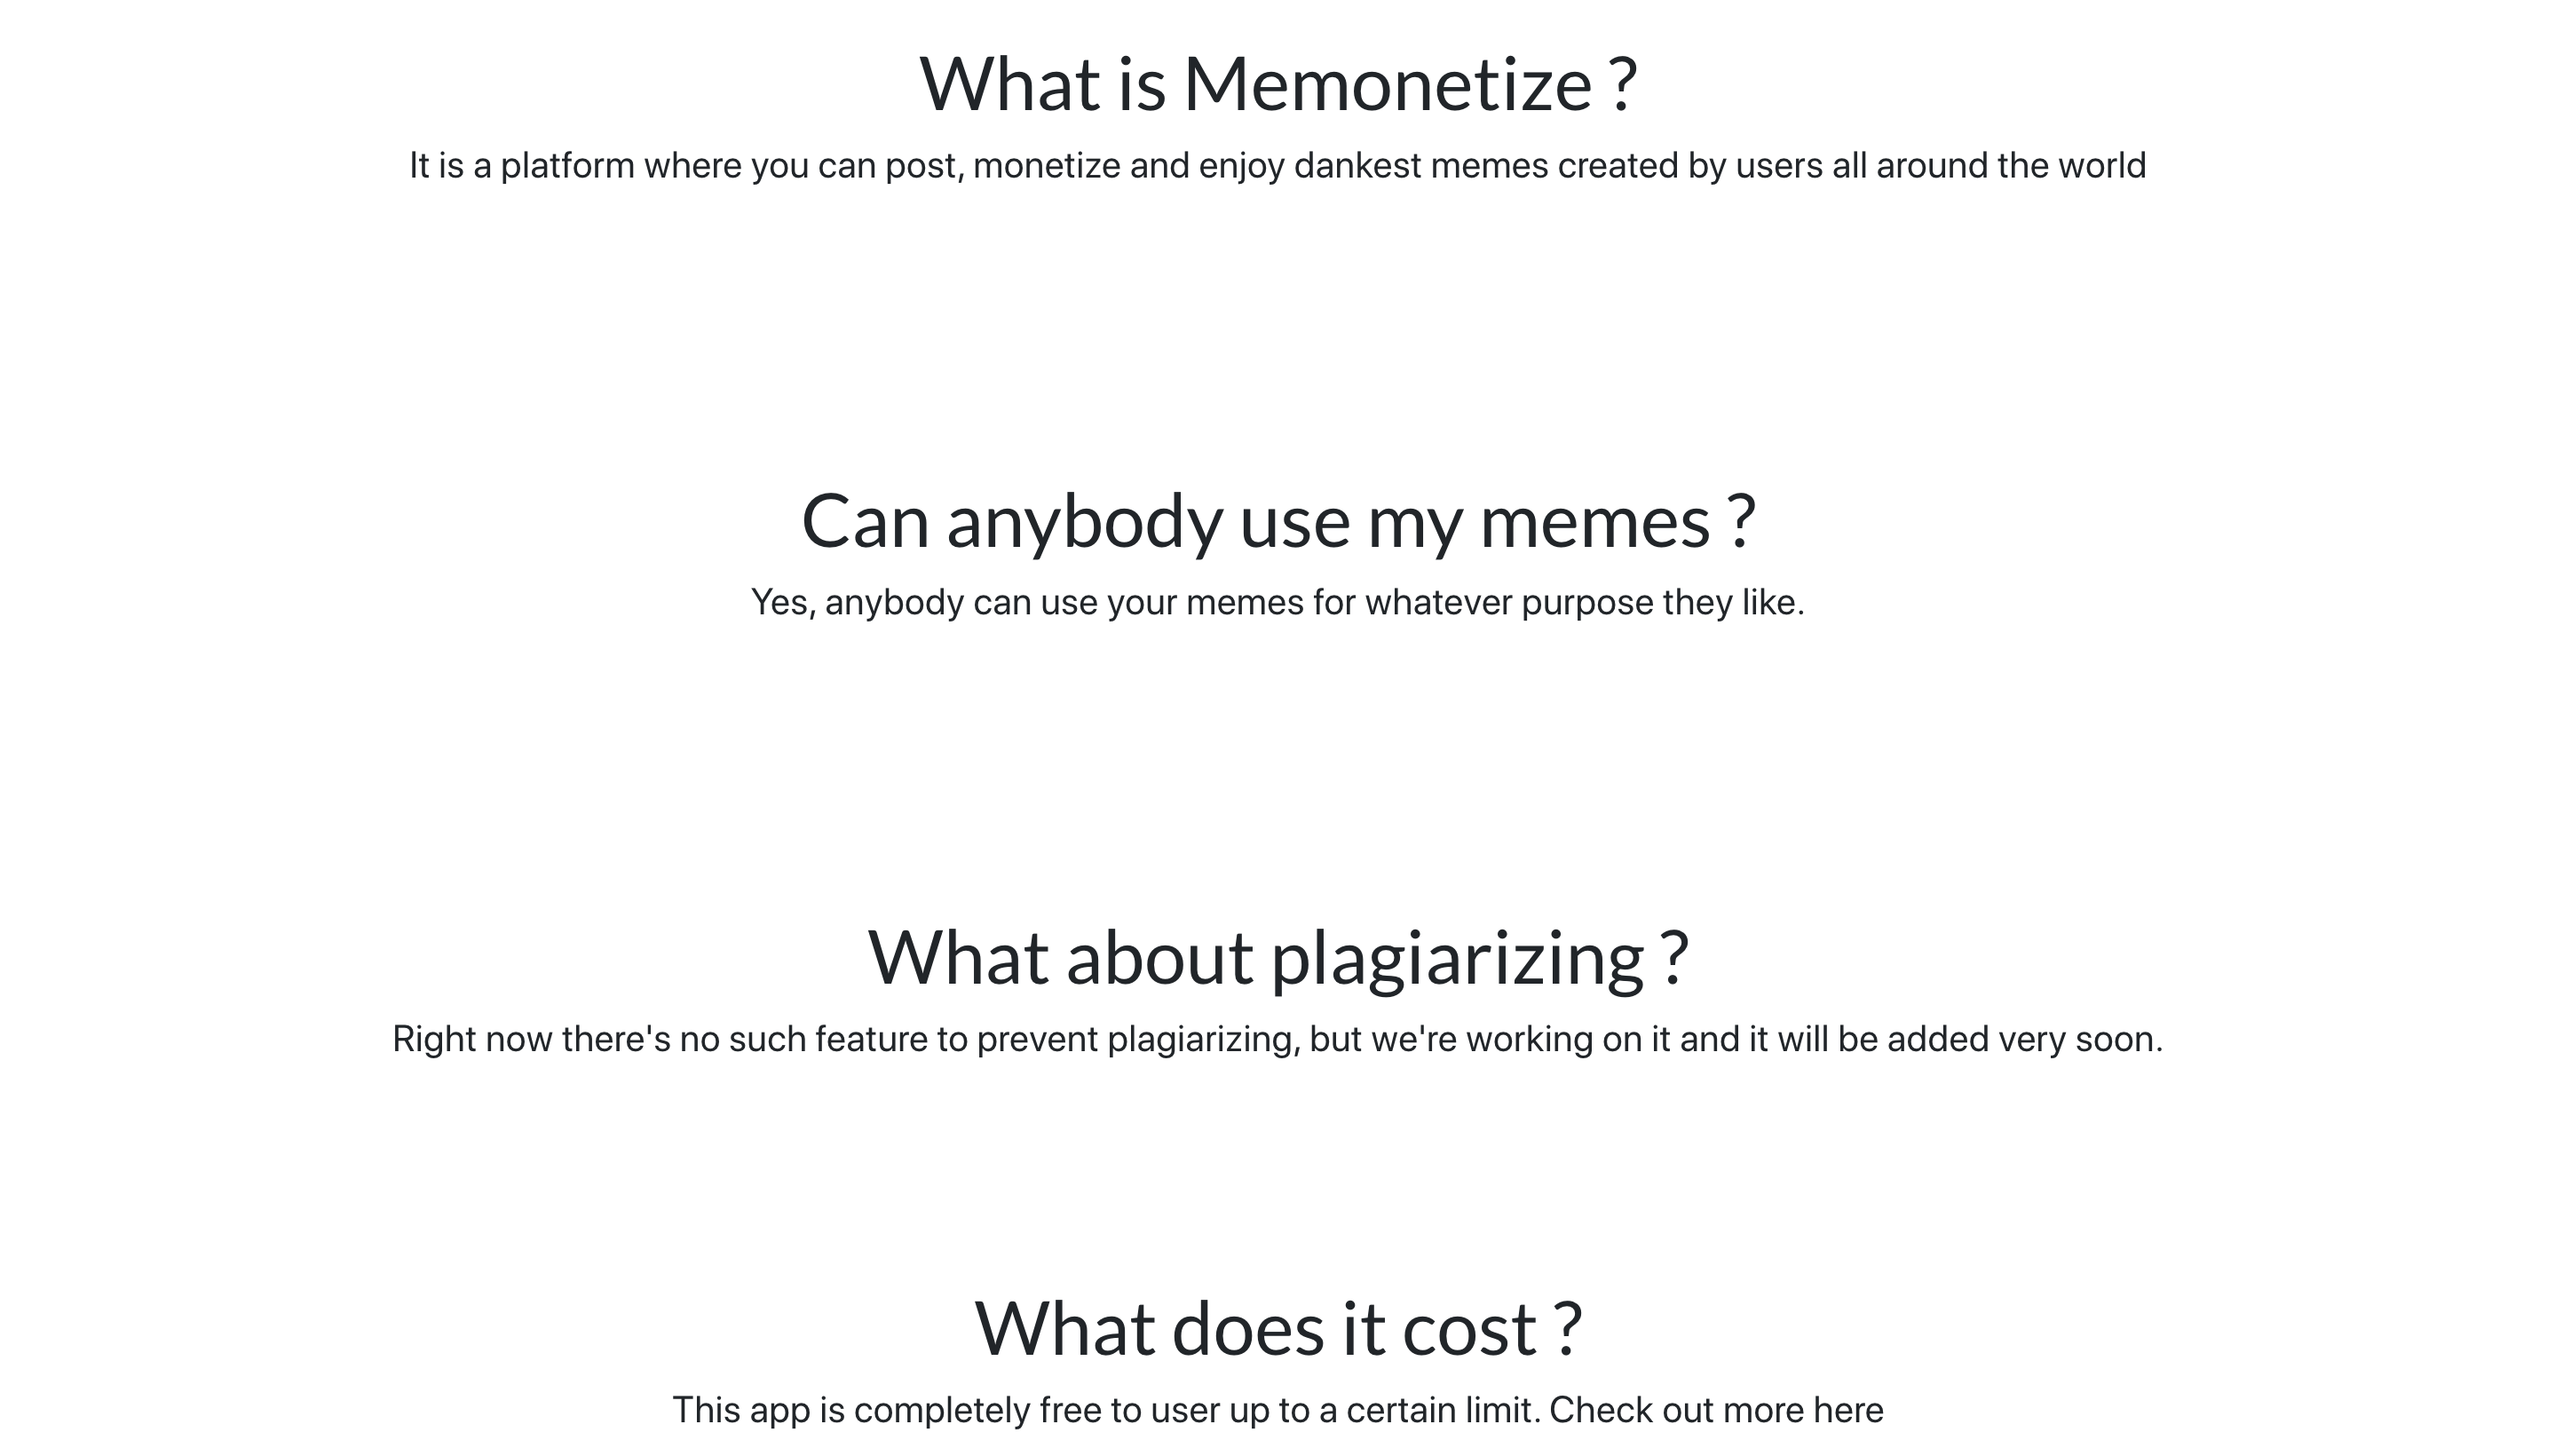 About Memonetize